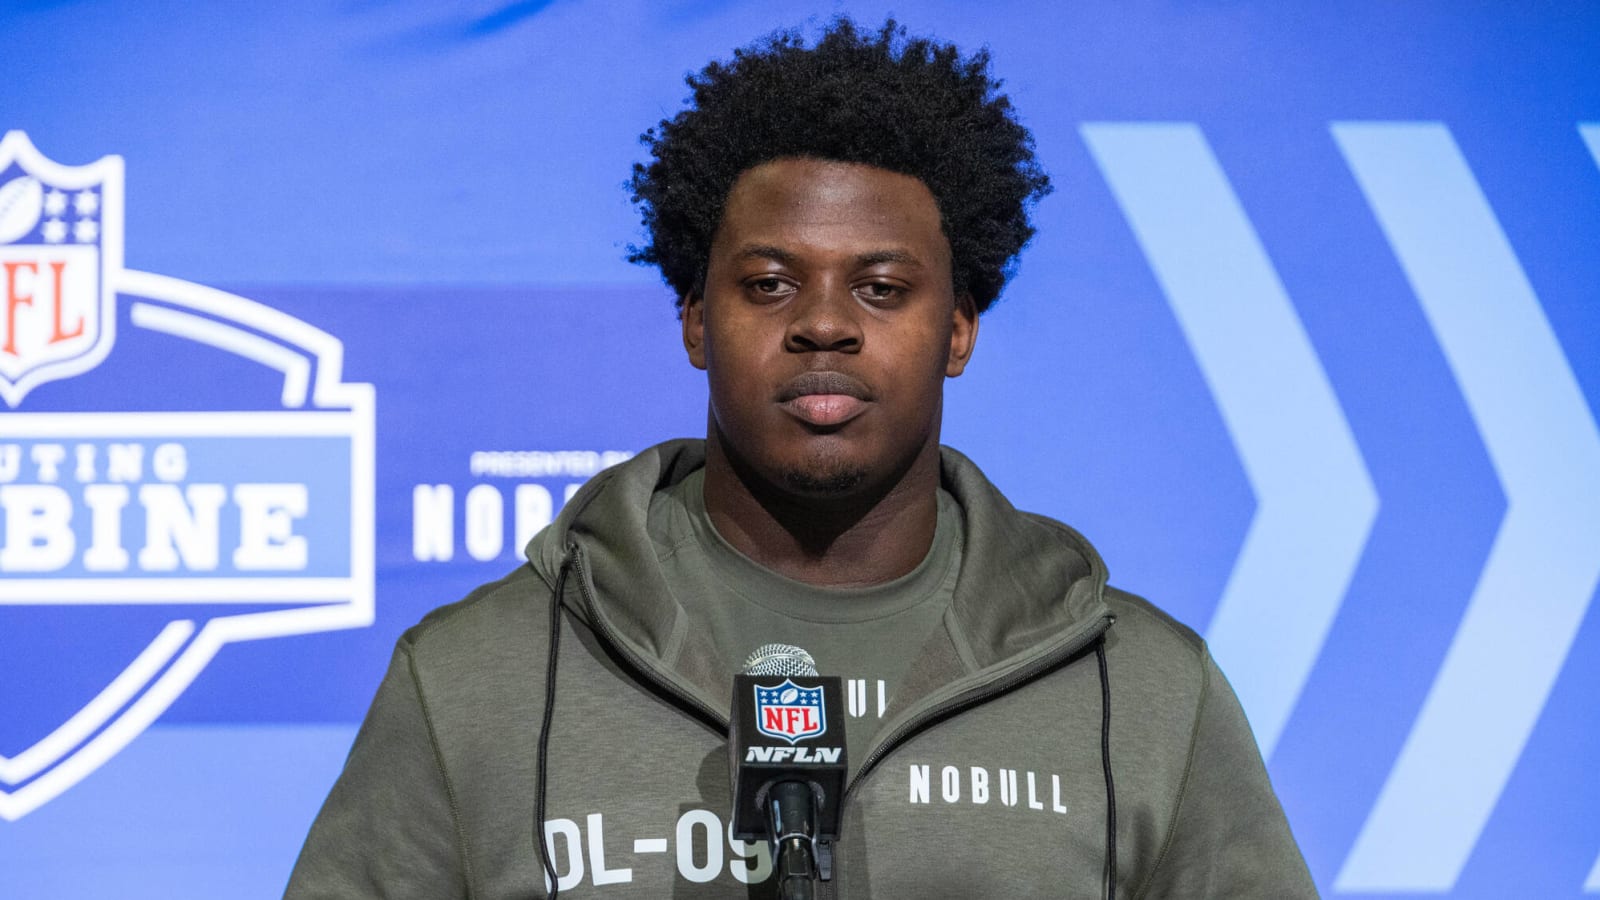 Pitt star reveals shocking news ahead of NFL Draft